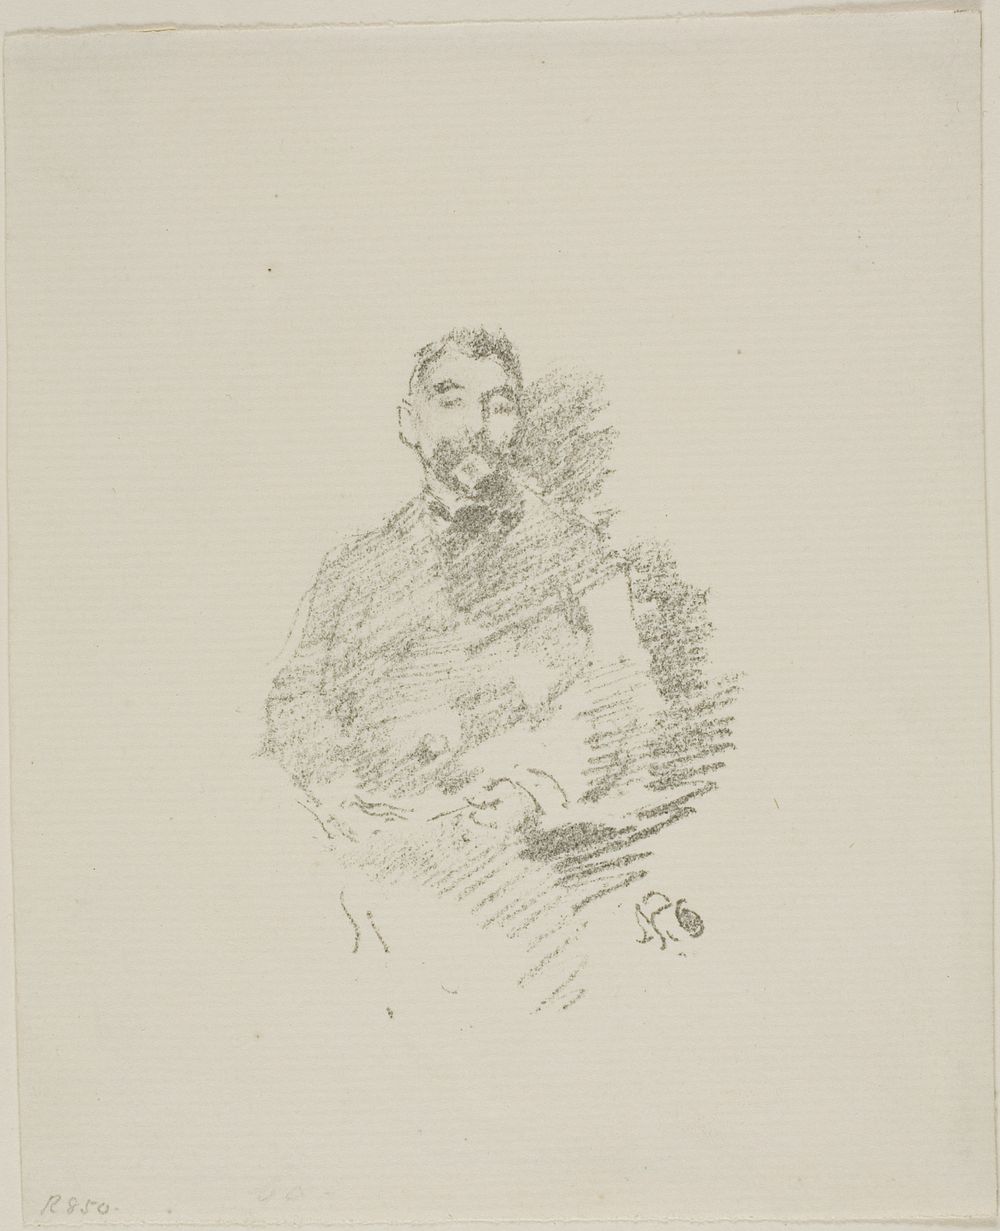 Stéphane Mallarmé by James McNeill Whistler